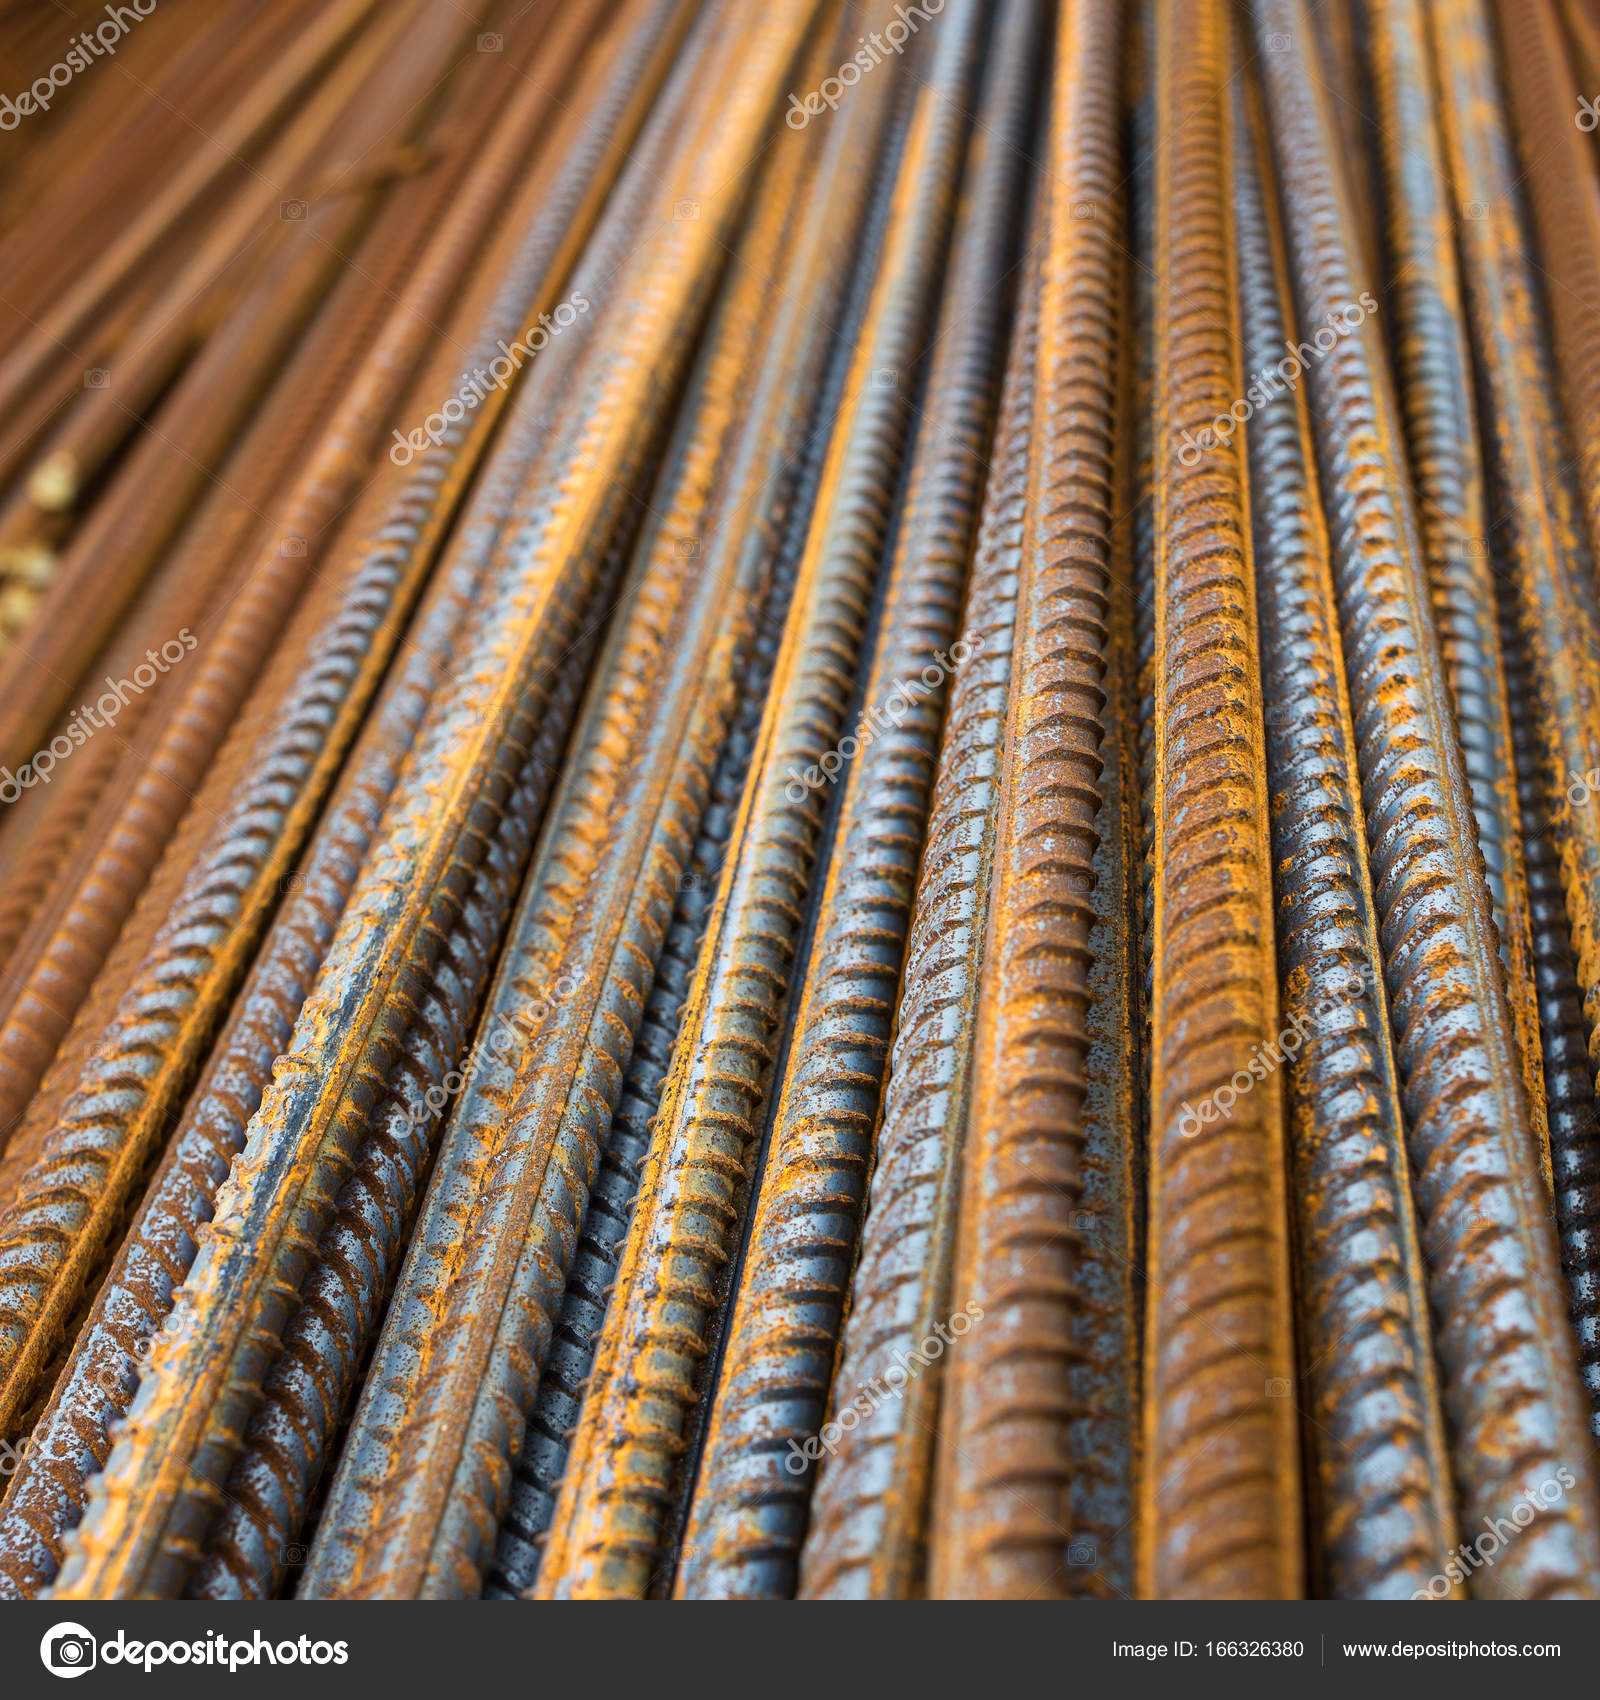 Rusty steel reinforcement bars — Stock Photo © danielshot #166326380